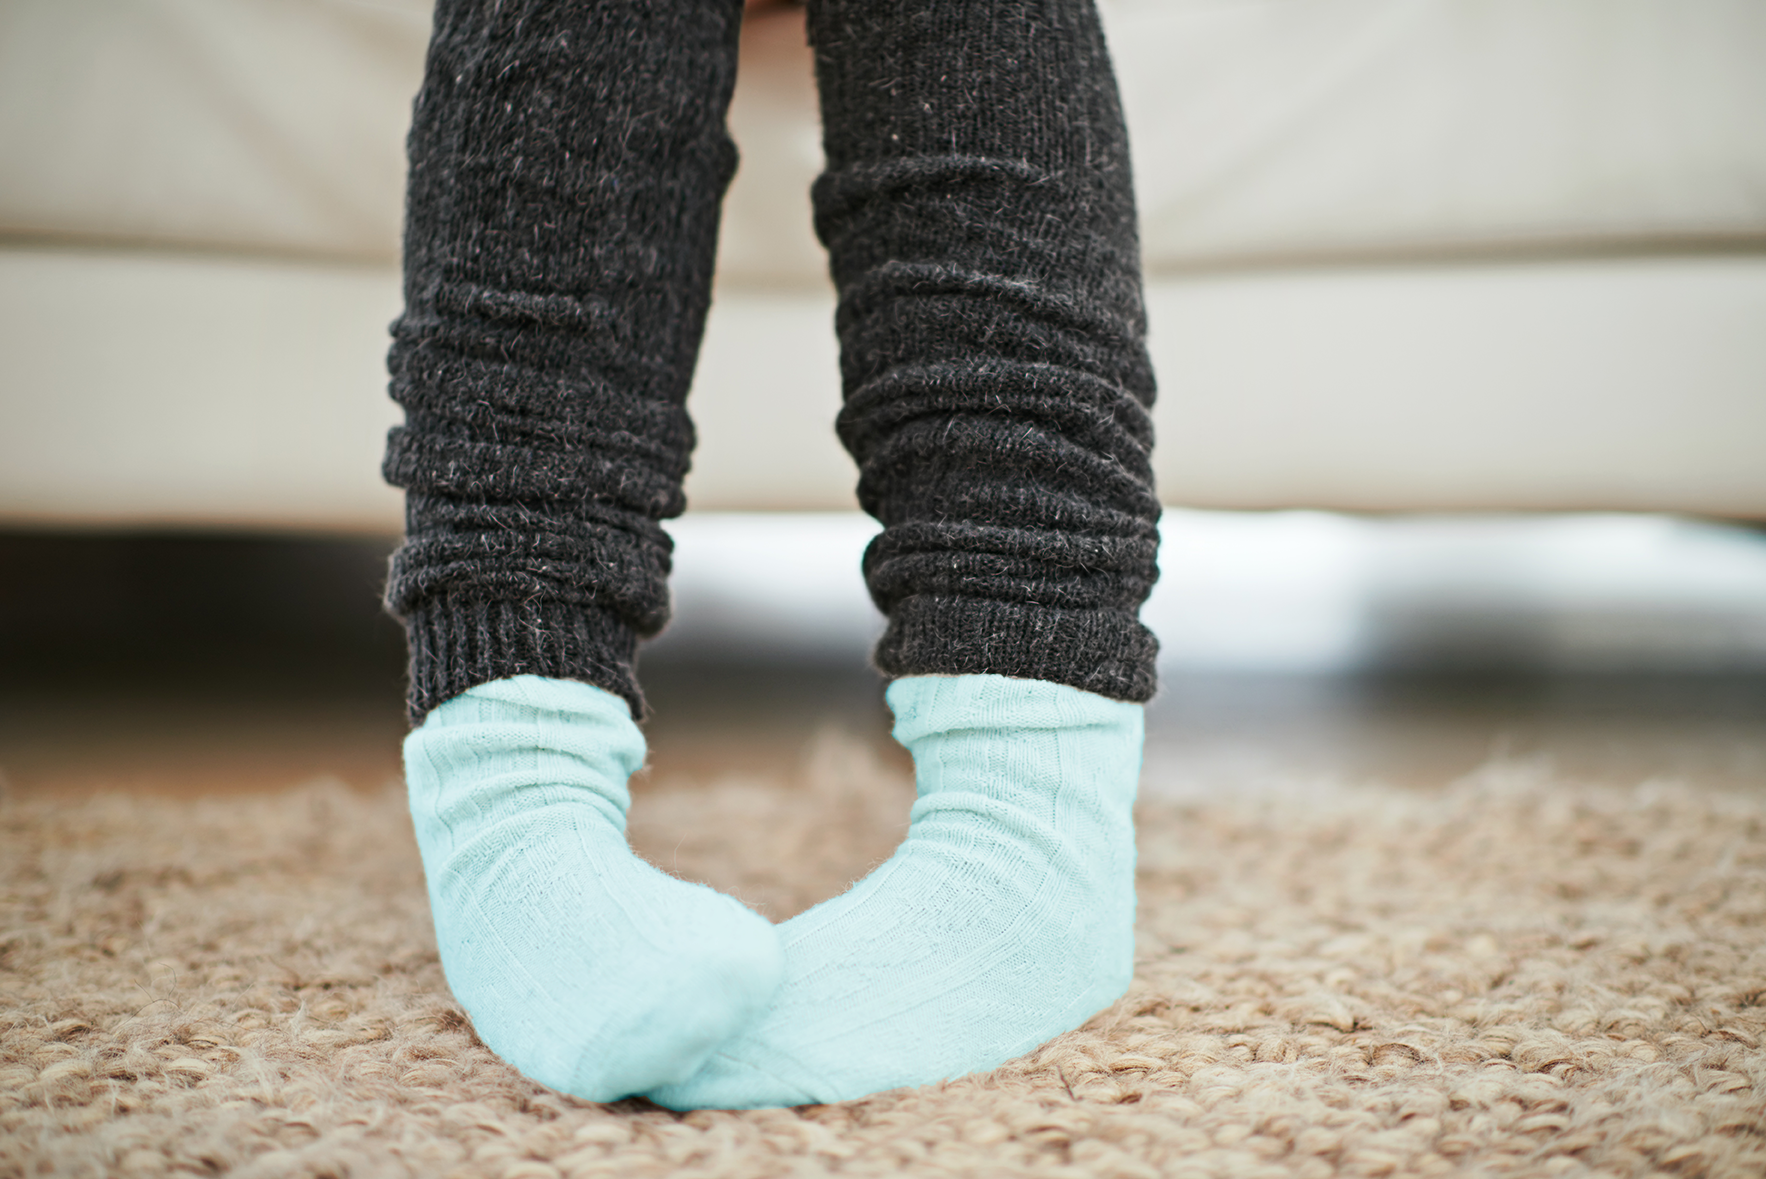 8 warm socks for cold feet